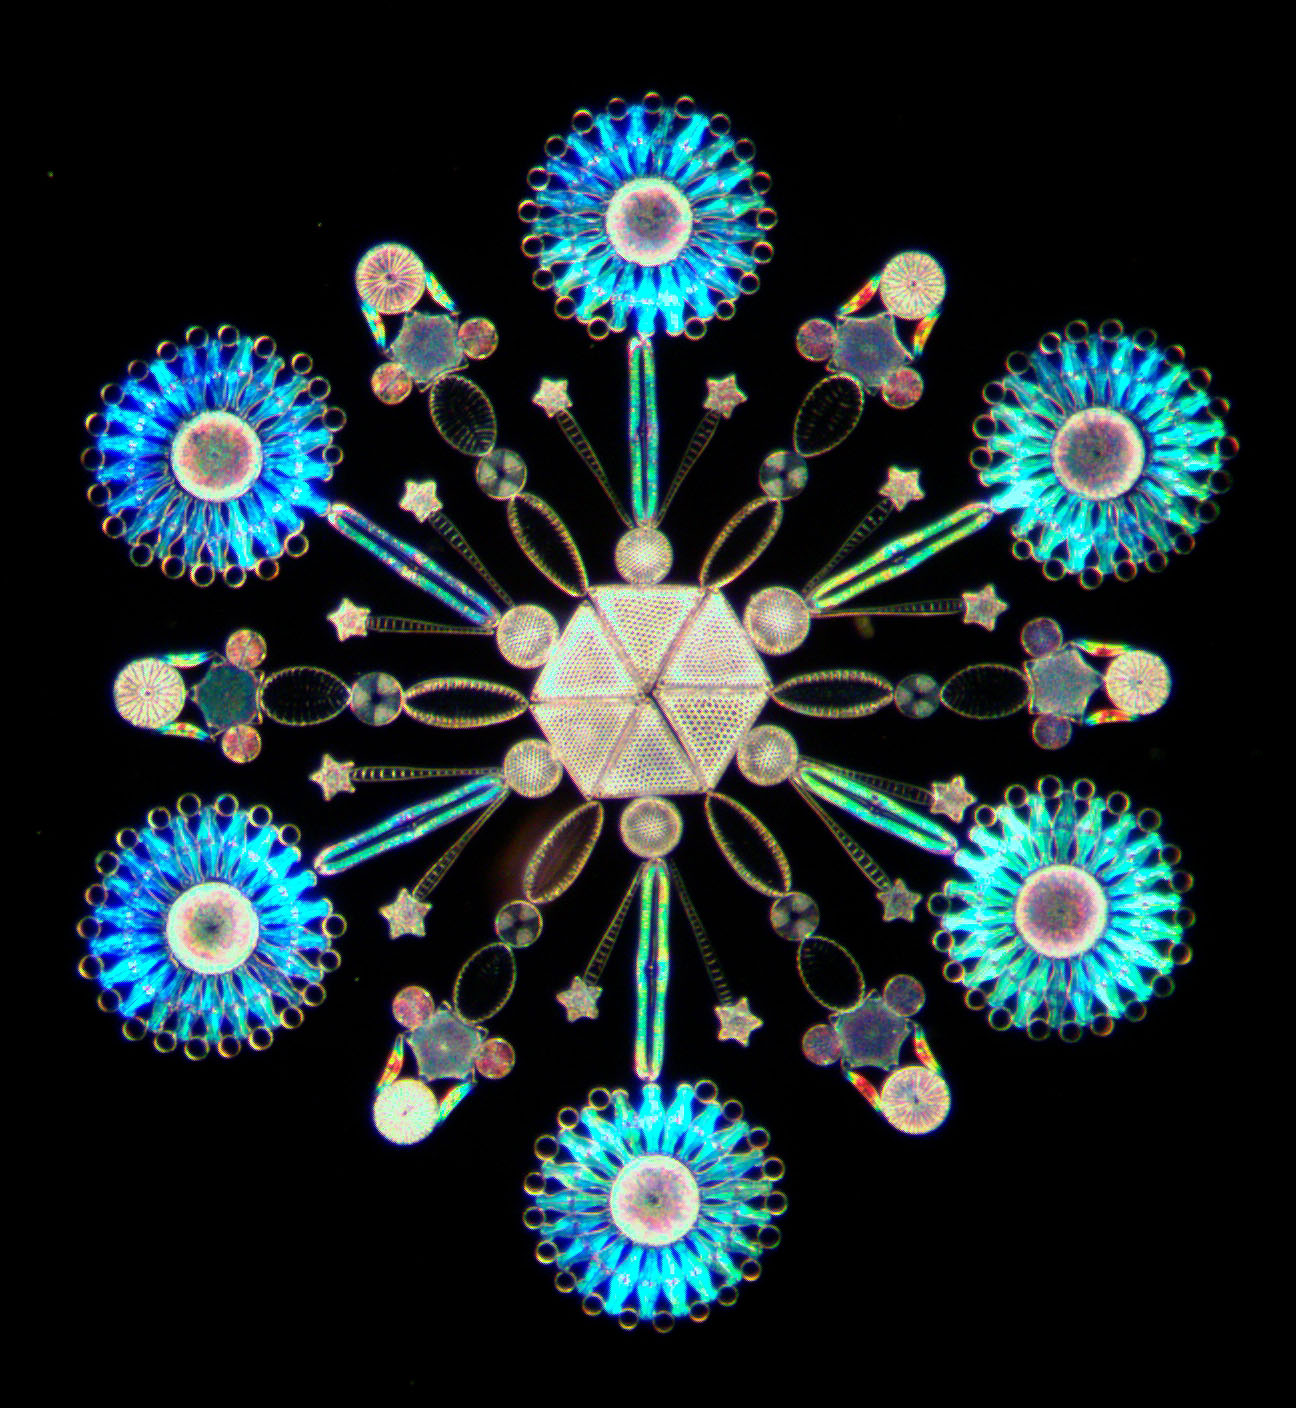 snowflake of diatoms